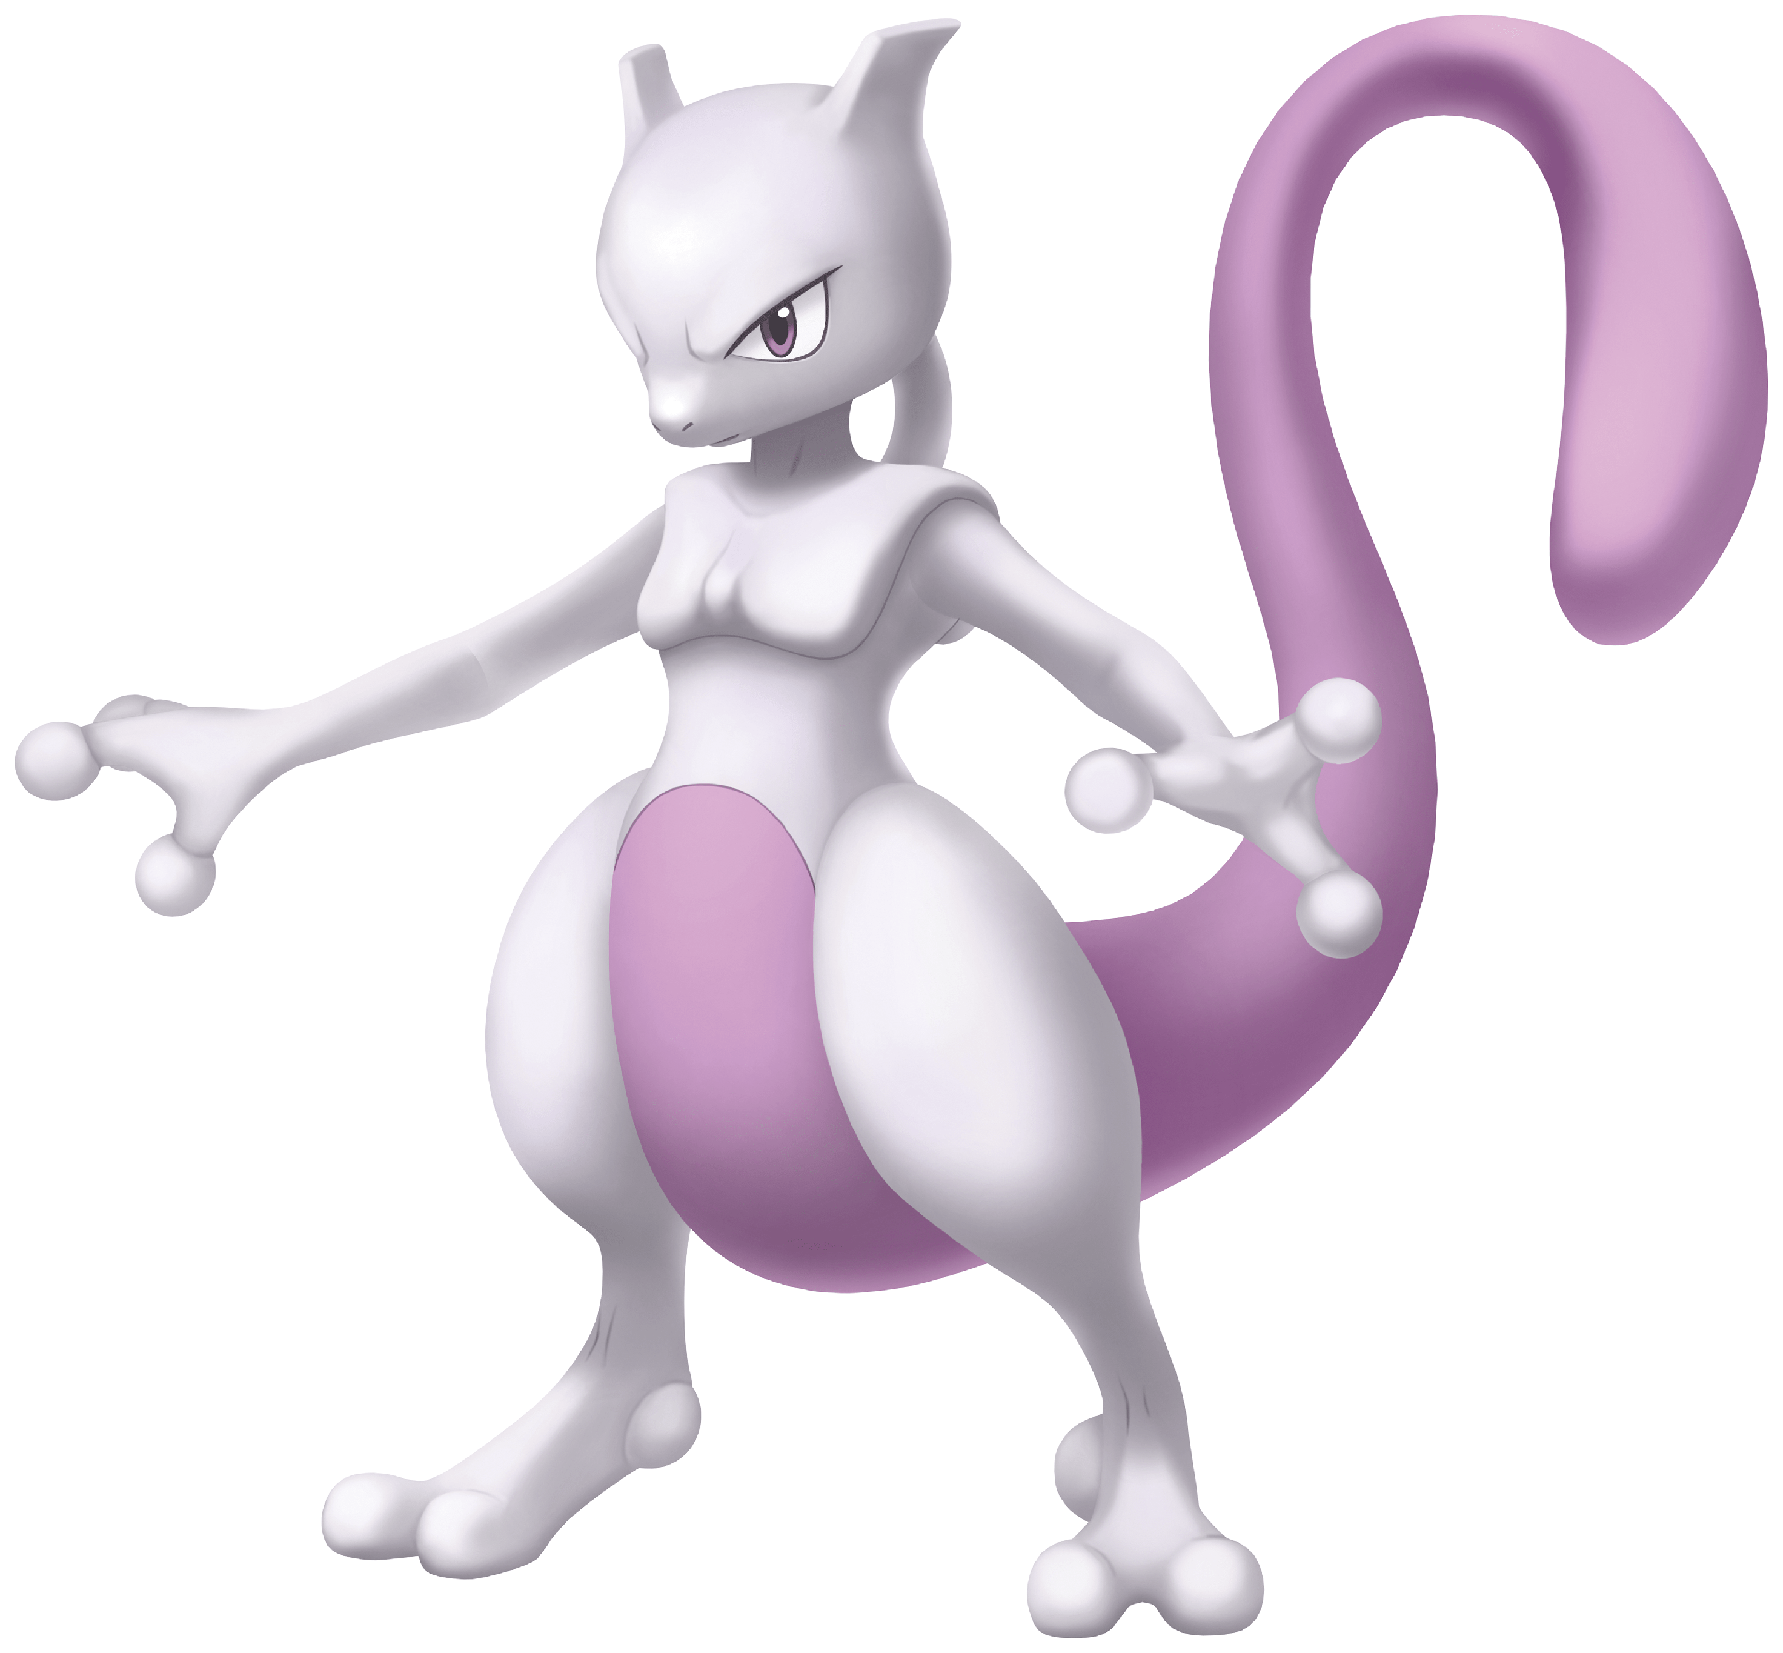 Shadow Mewtwo - Bulbapedia, the community-driven Pokémon encyclopedia